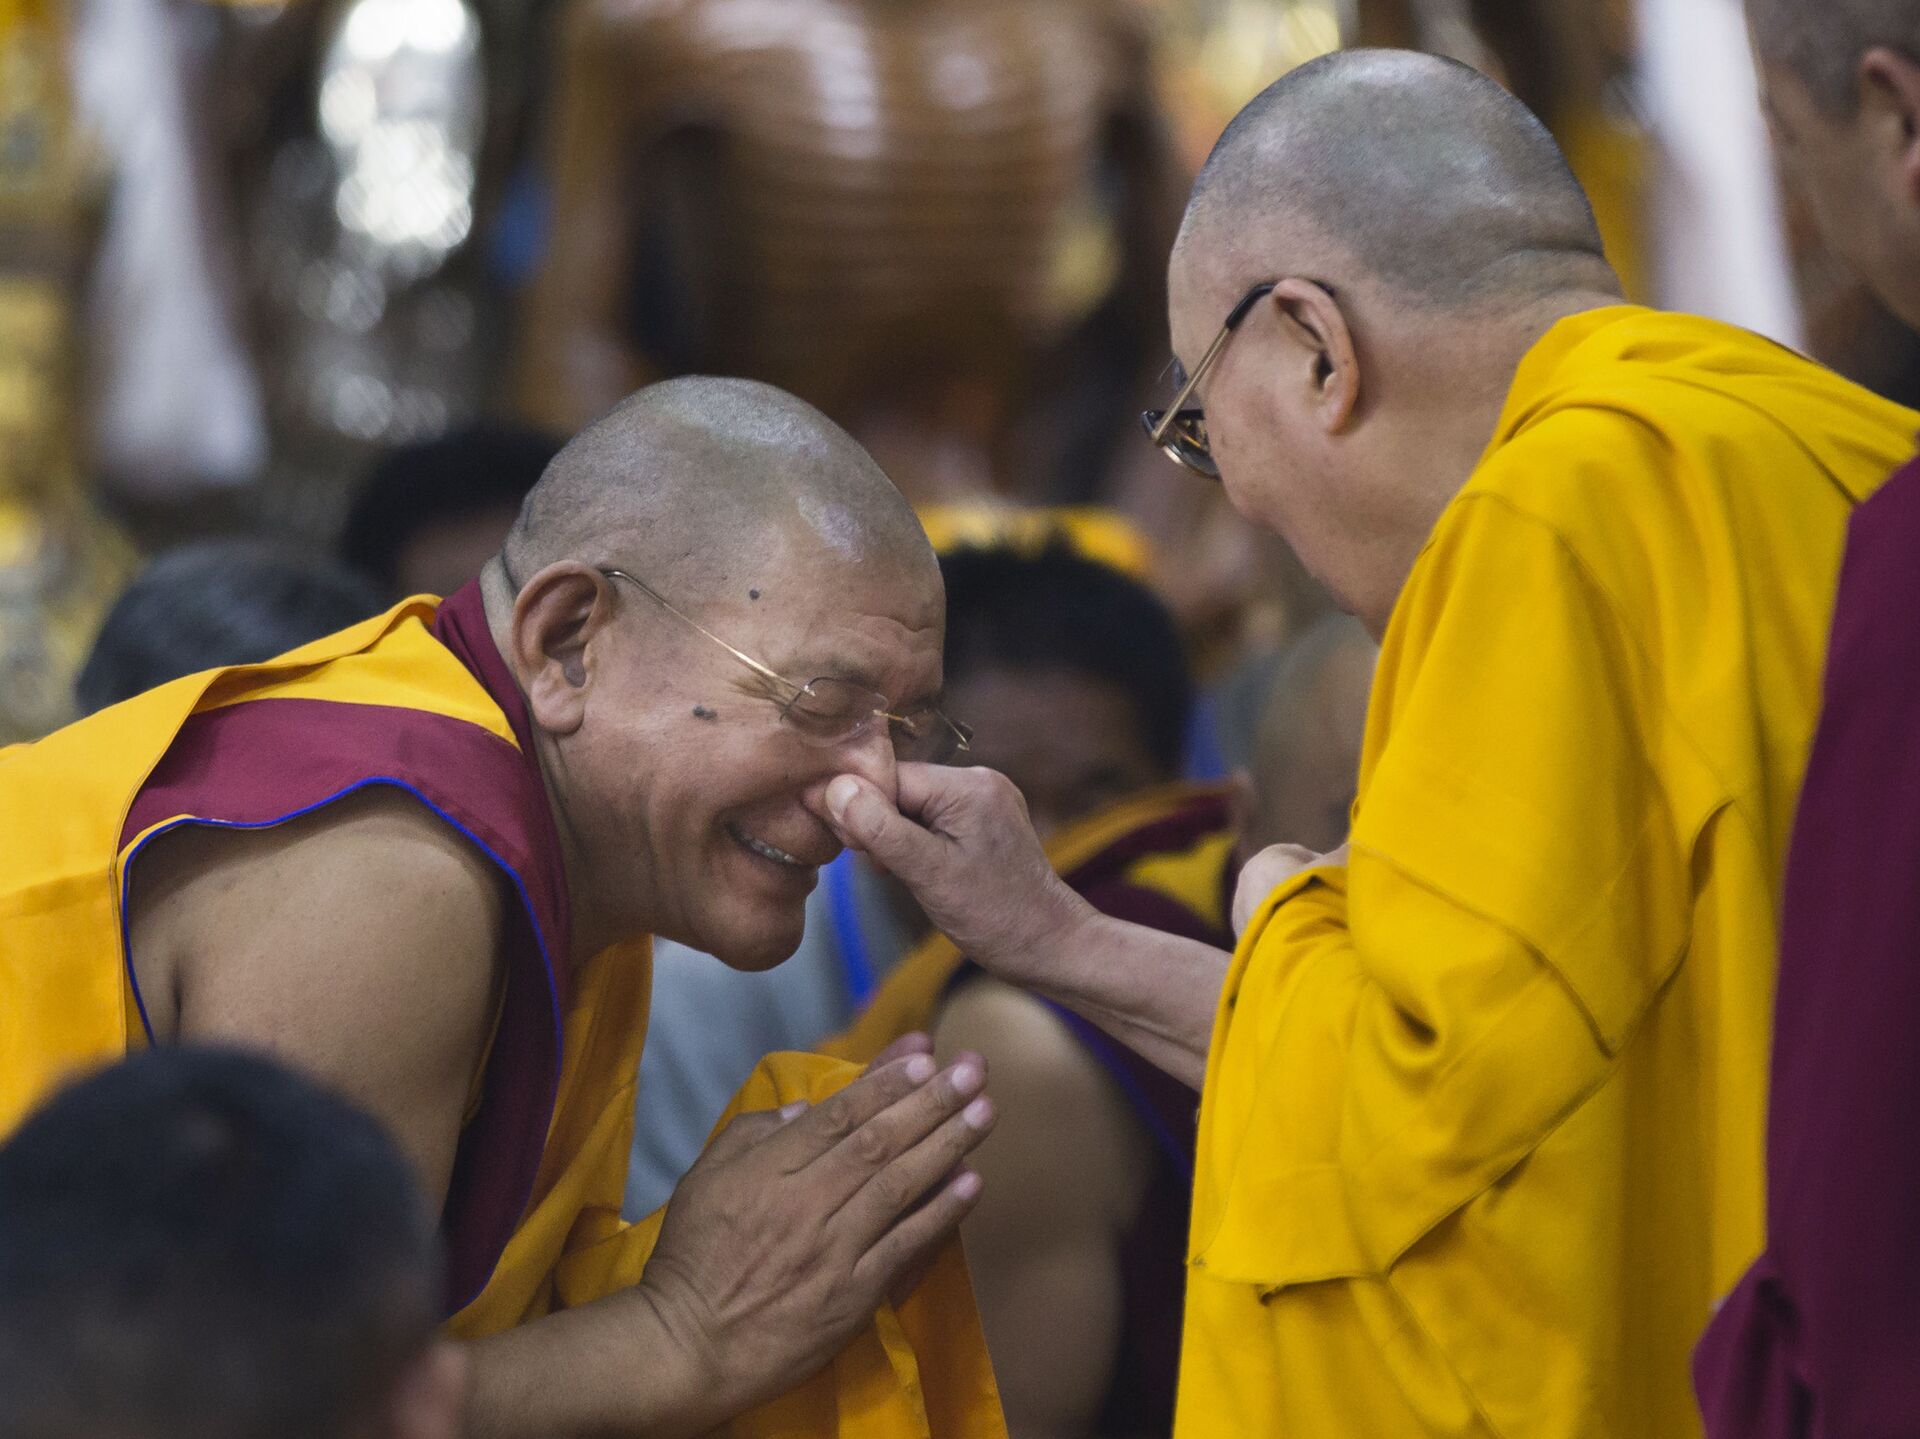 Буддисты это кто. Буддисты Далай лама. Монах Далай лама. Далай лама 14 Тибет. Тибетский монах Далай лама 14.